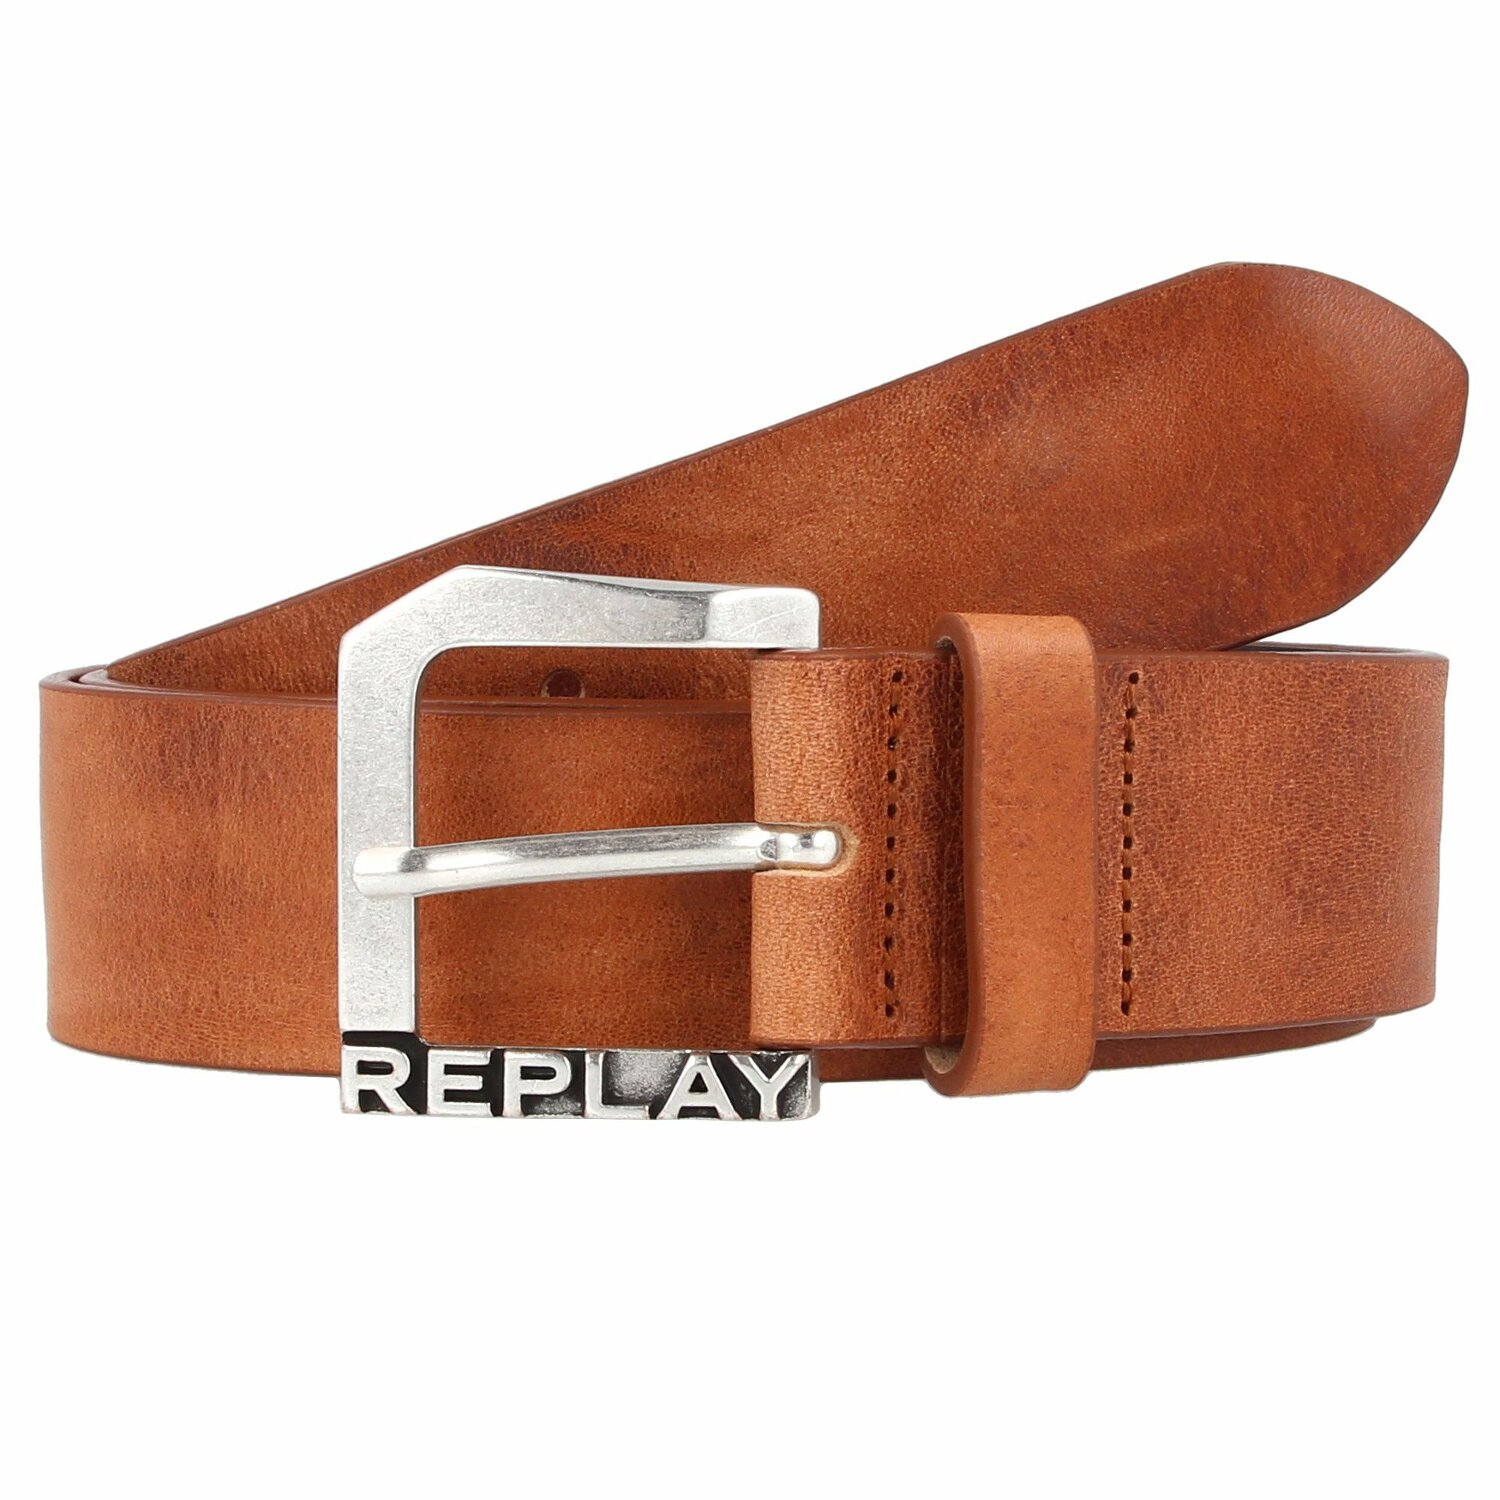 [Viele beliebte Produkte verfügbar] Replay Gürtel Leder tan | 100 cm bei 